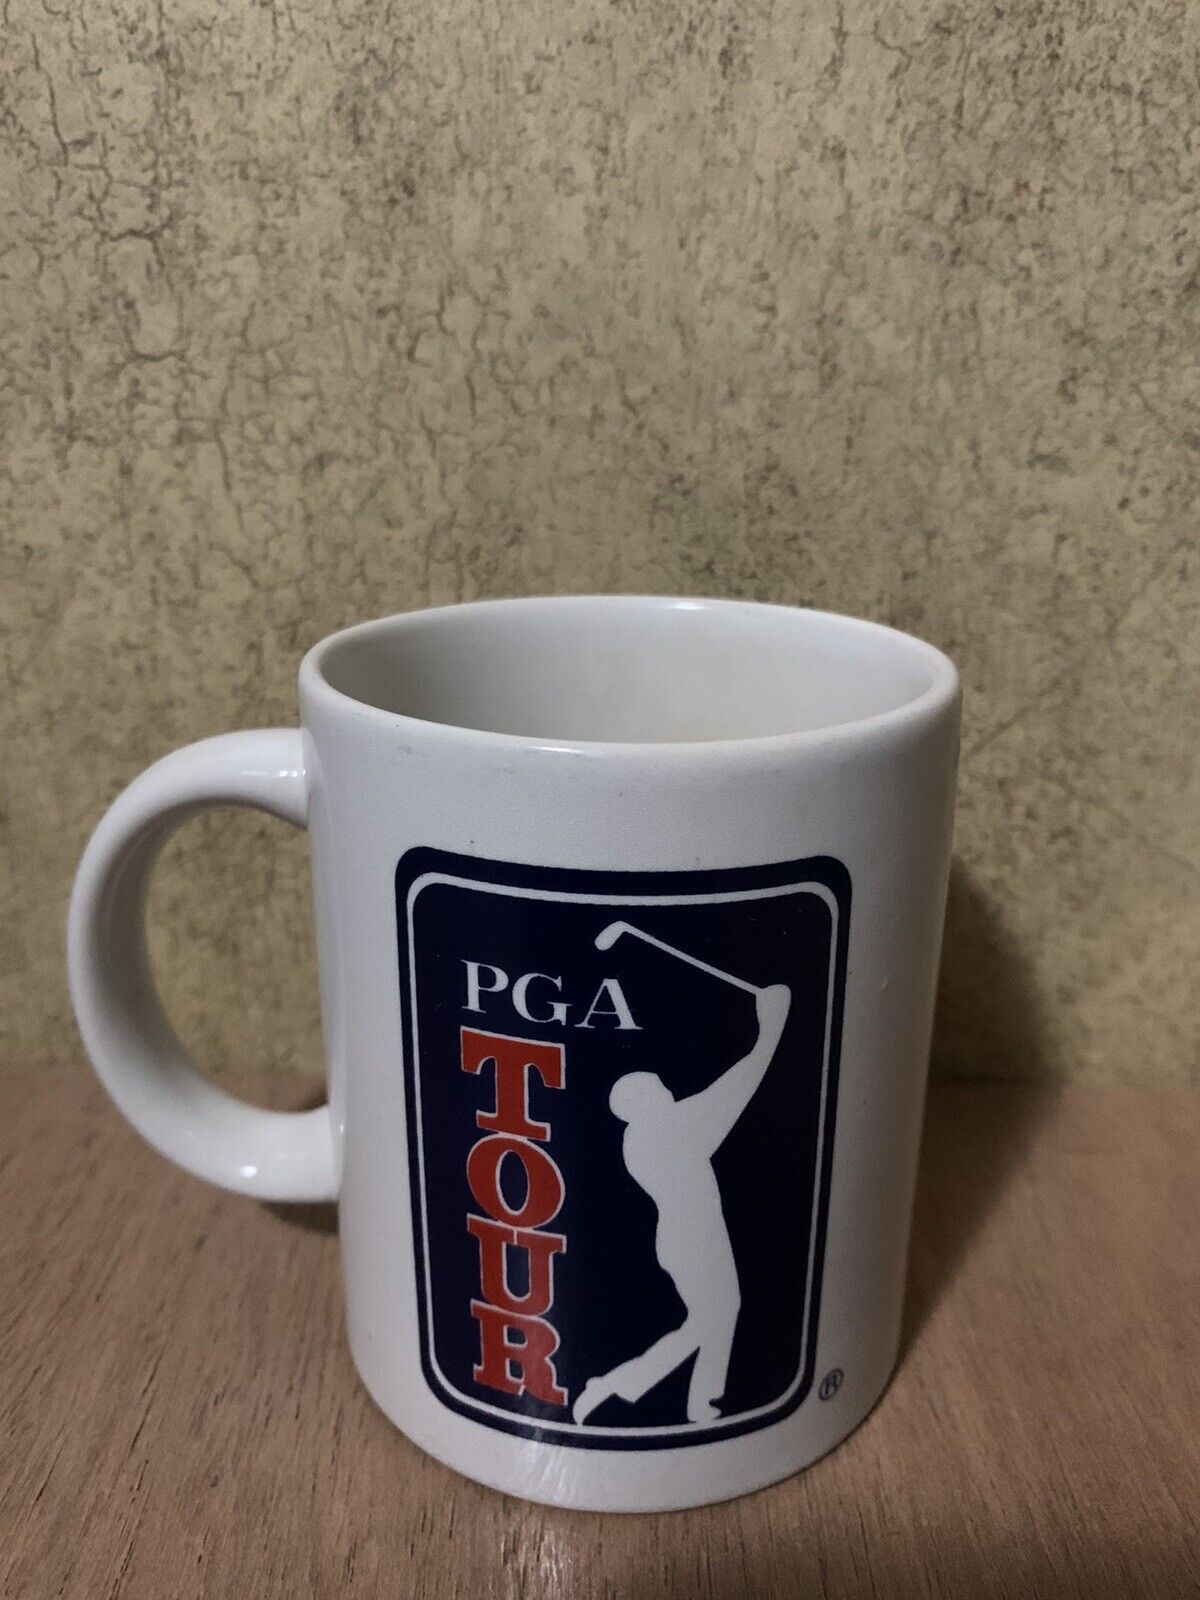 PGA Tour Golf Golfer Coffee Cup Mug